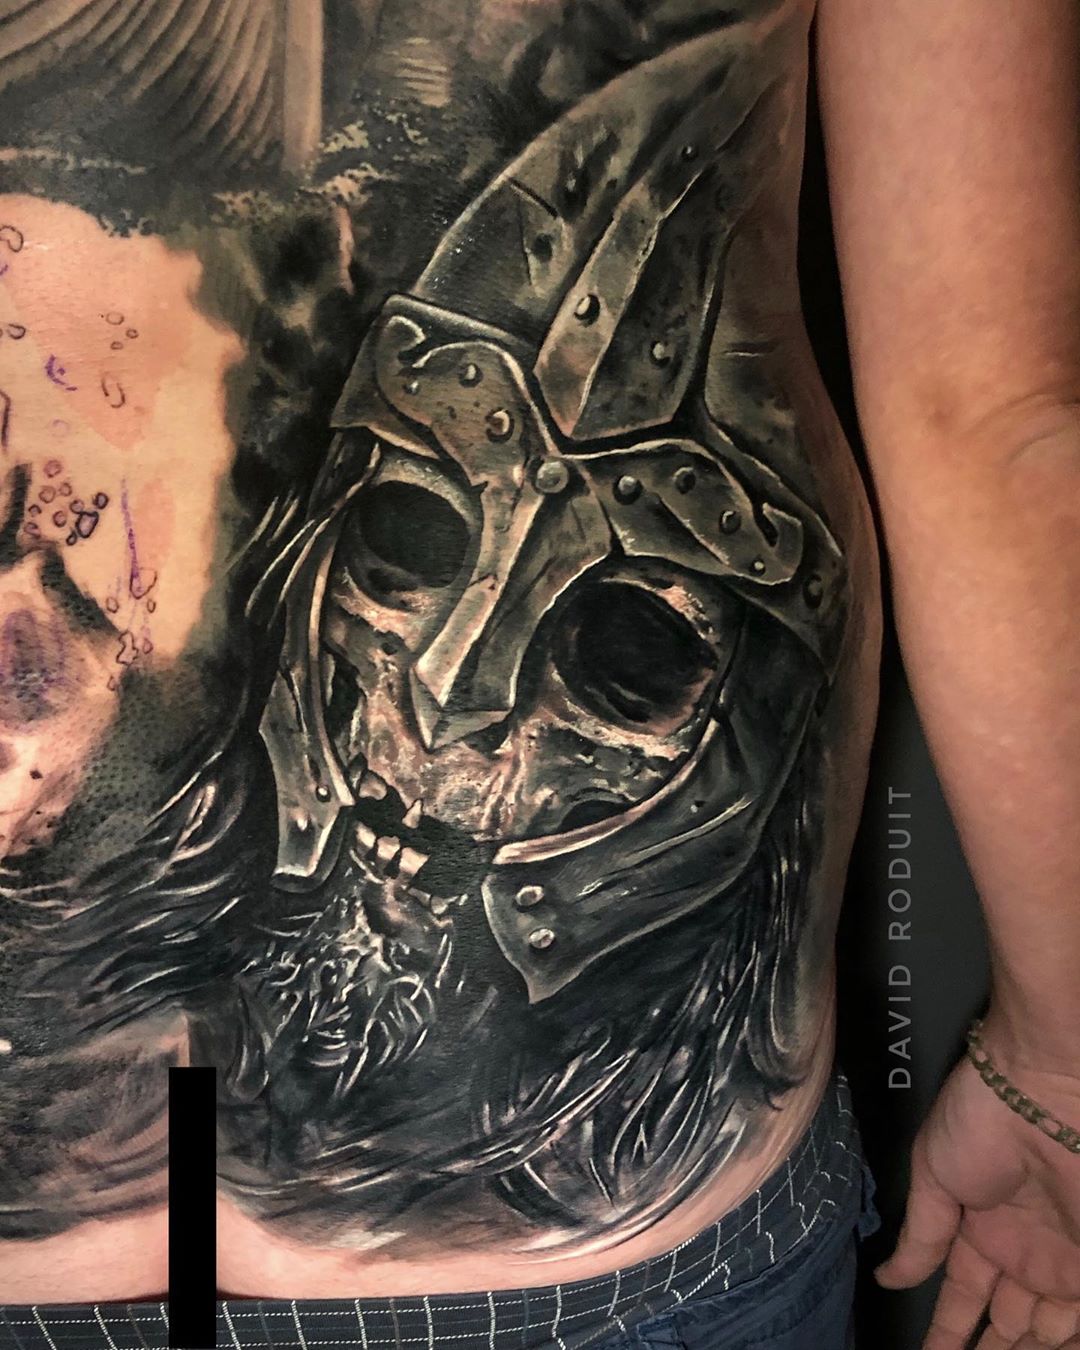 Skull and Spartan Helmet Tattoo by Enoki Soju by enokisoju on DeviantArt